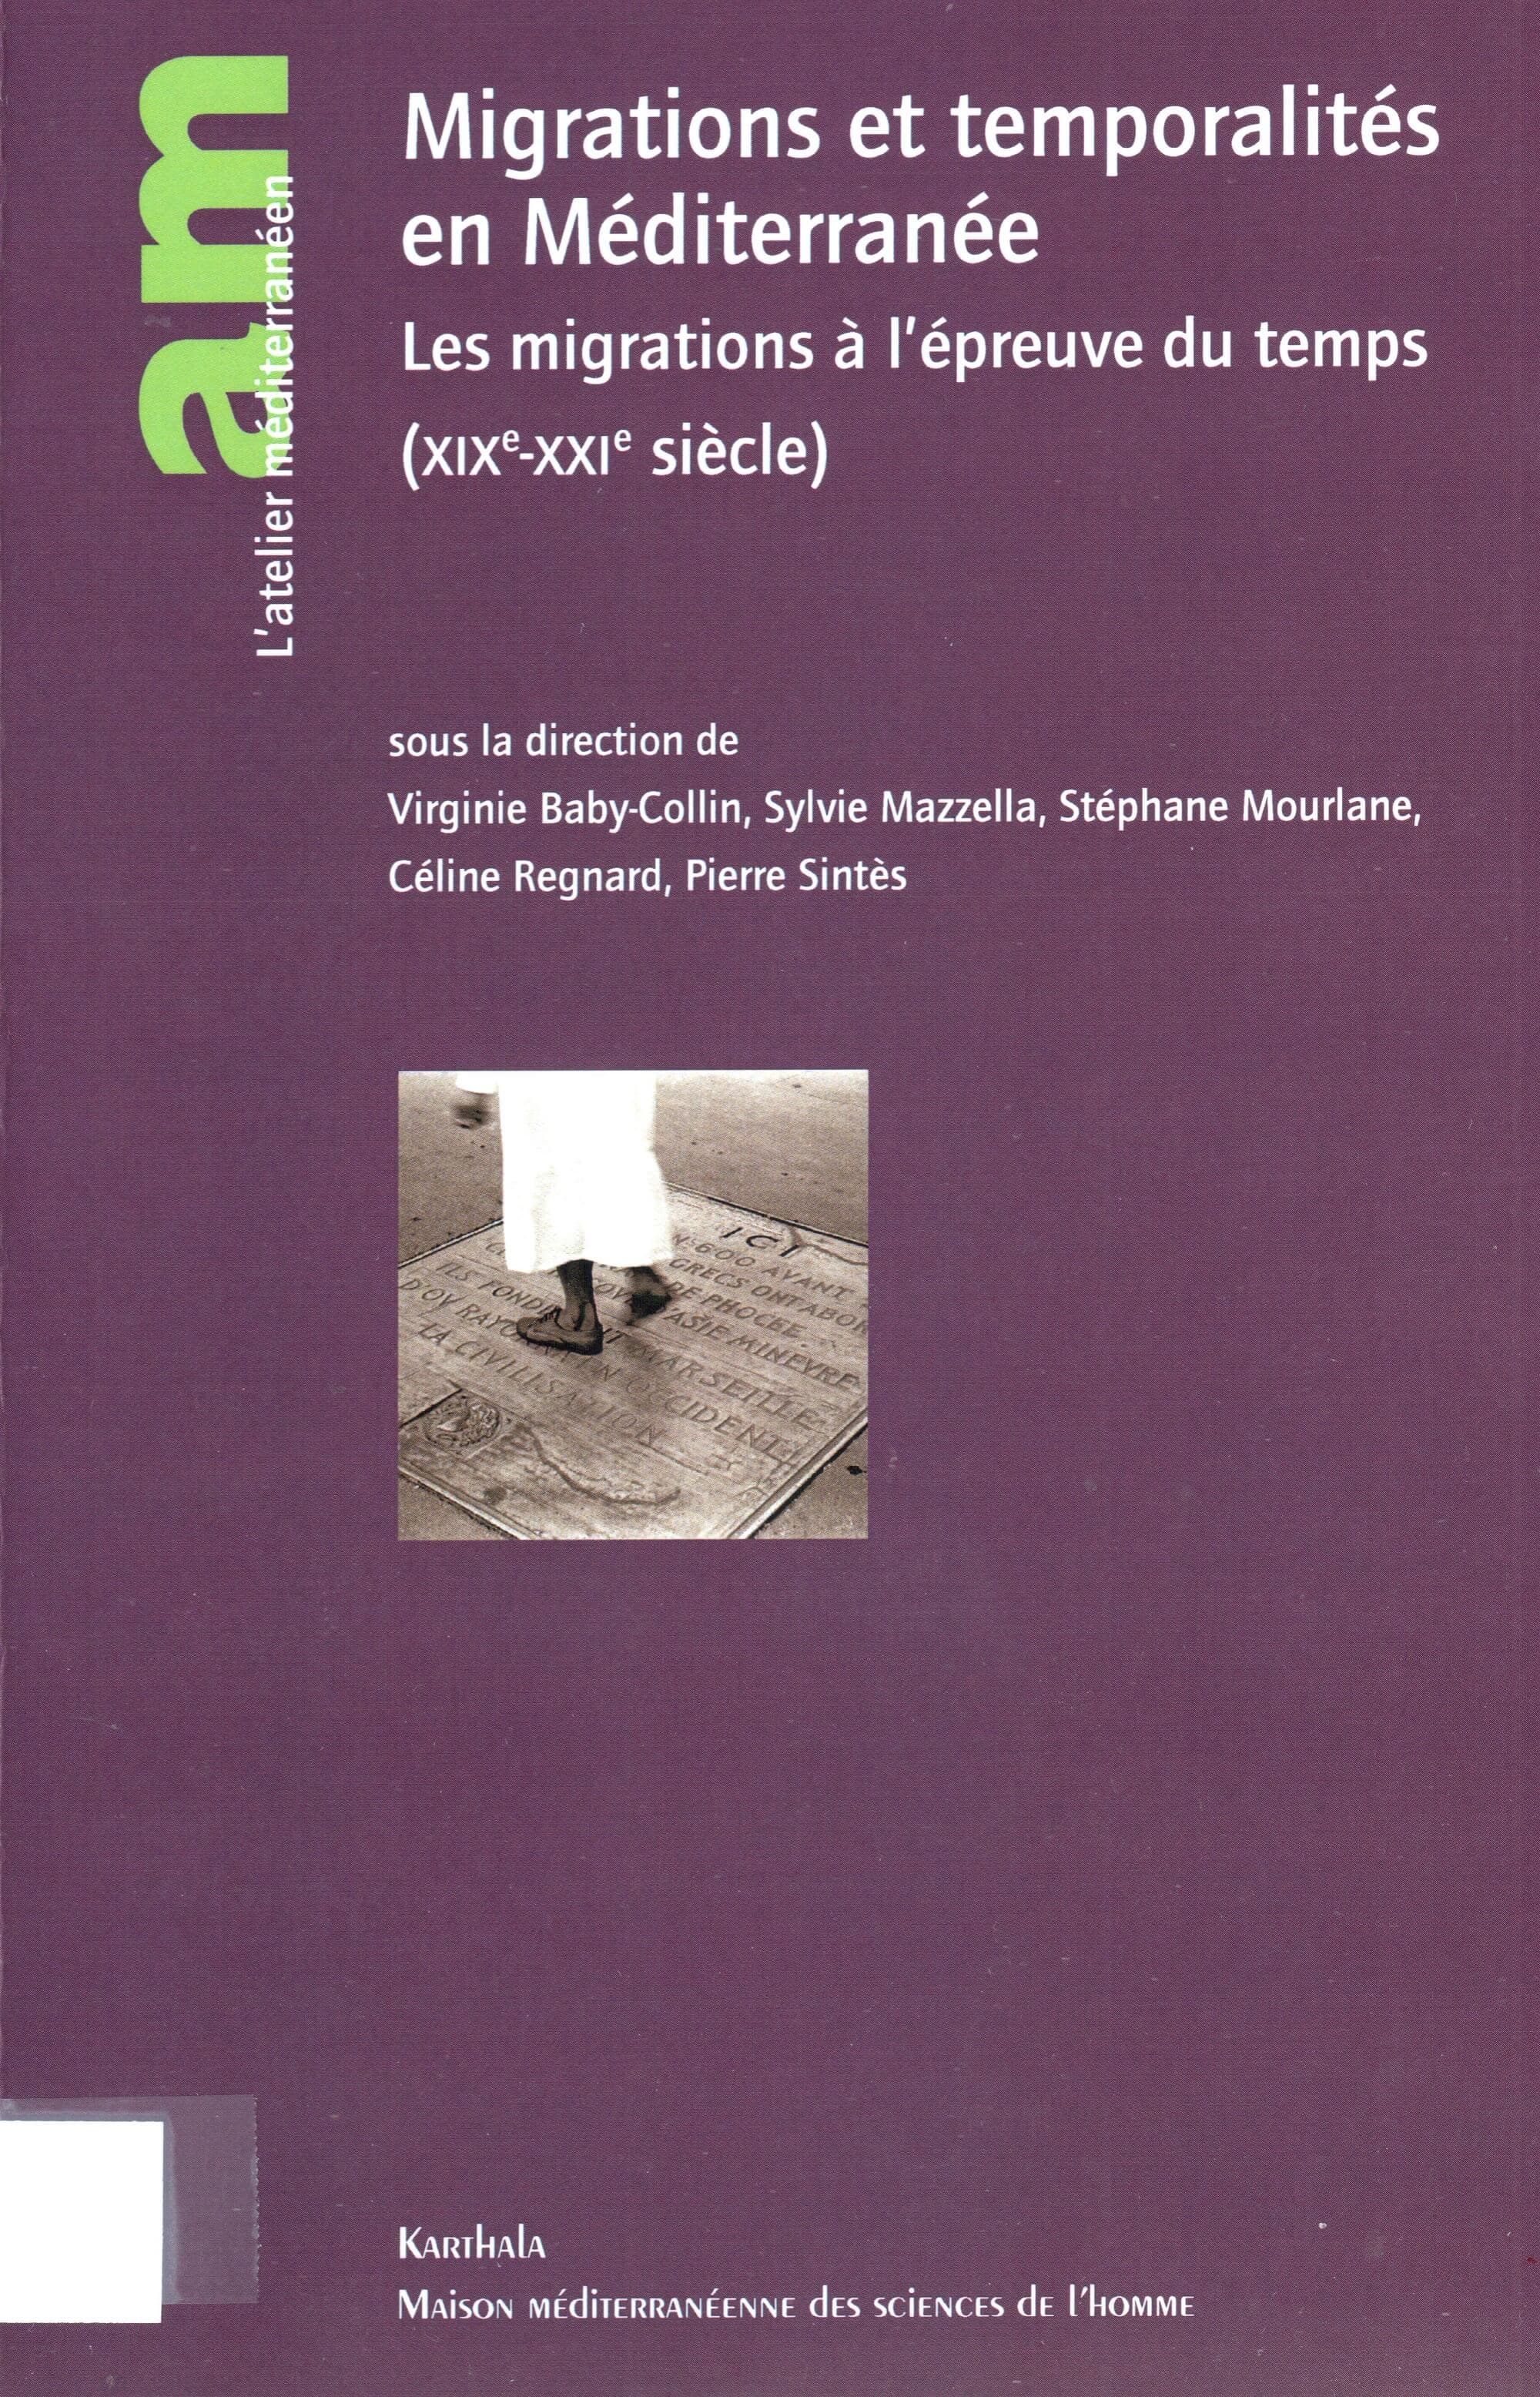 Imagen de portada del libro Migrations et temporalités en Méditerranée